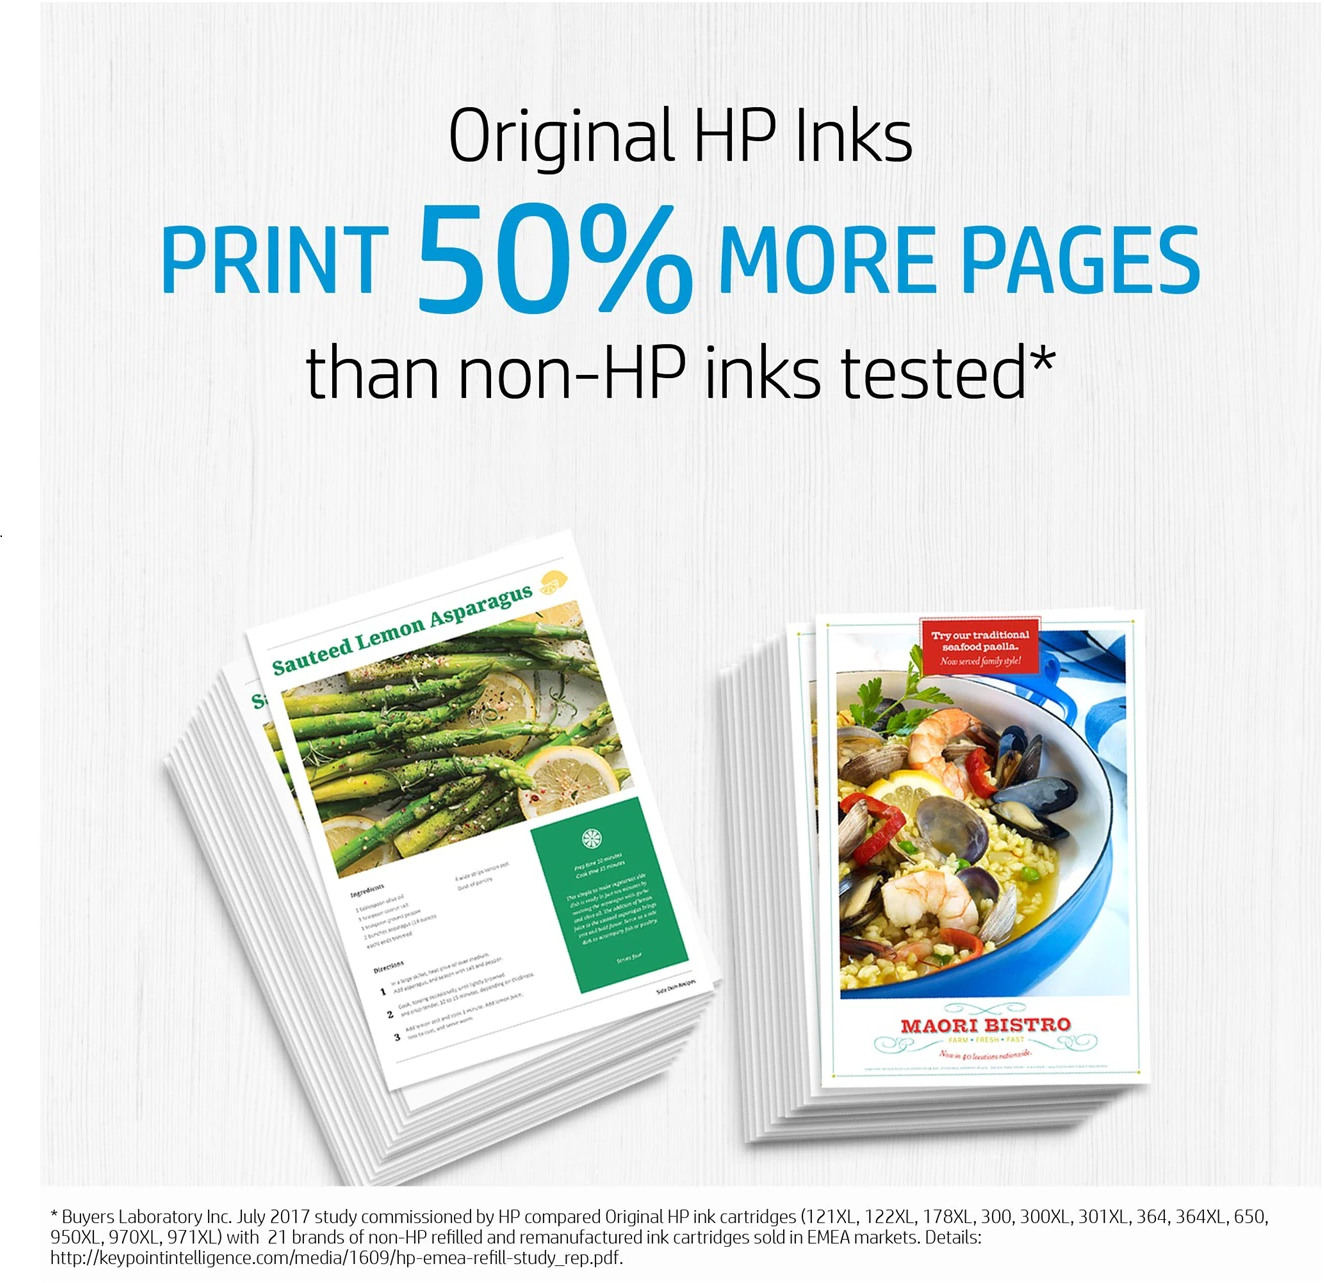 HP Adv. Photo Paper 20 feuilles 49V50A Gloss 5x5in/127x127mm